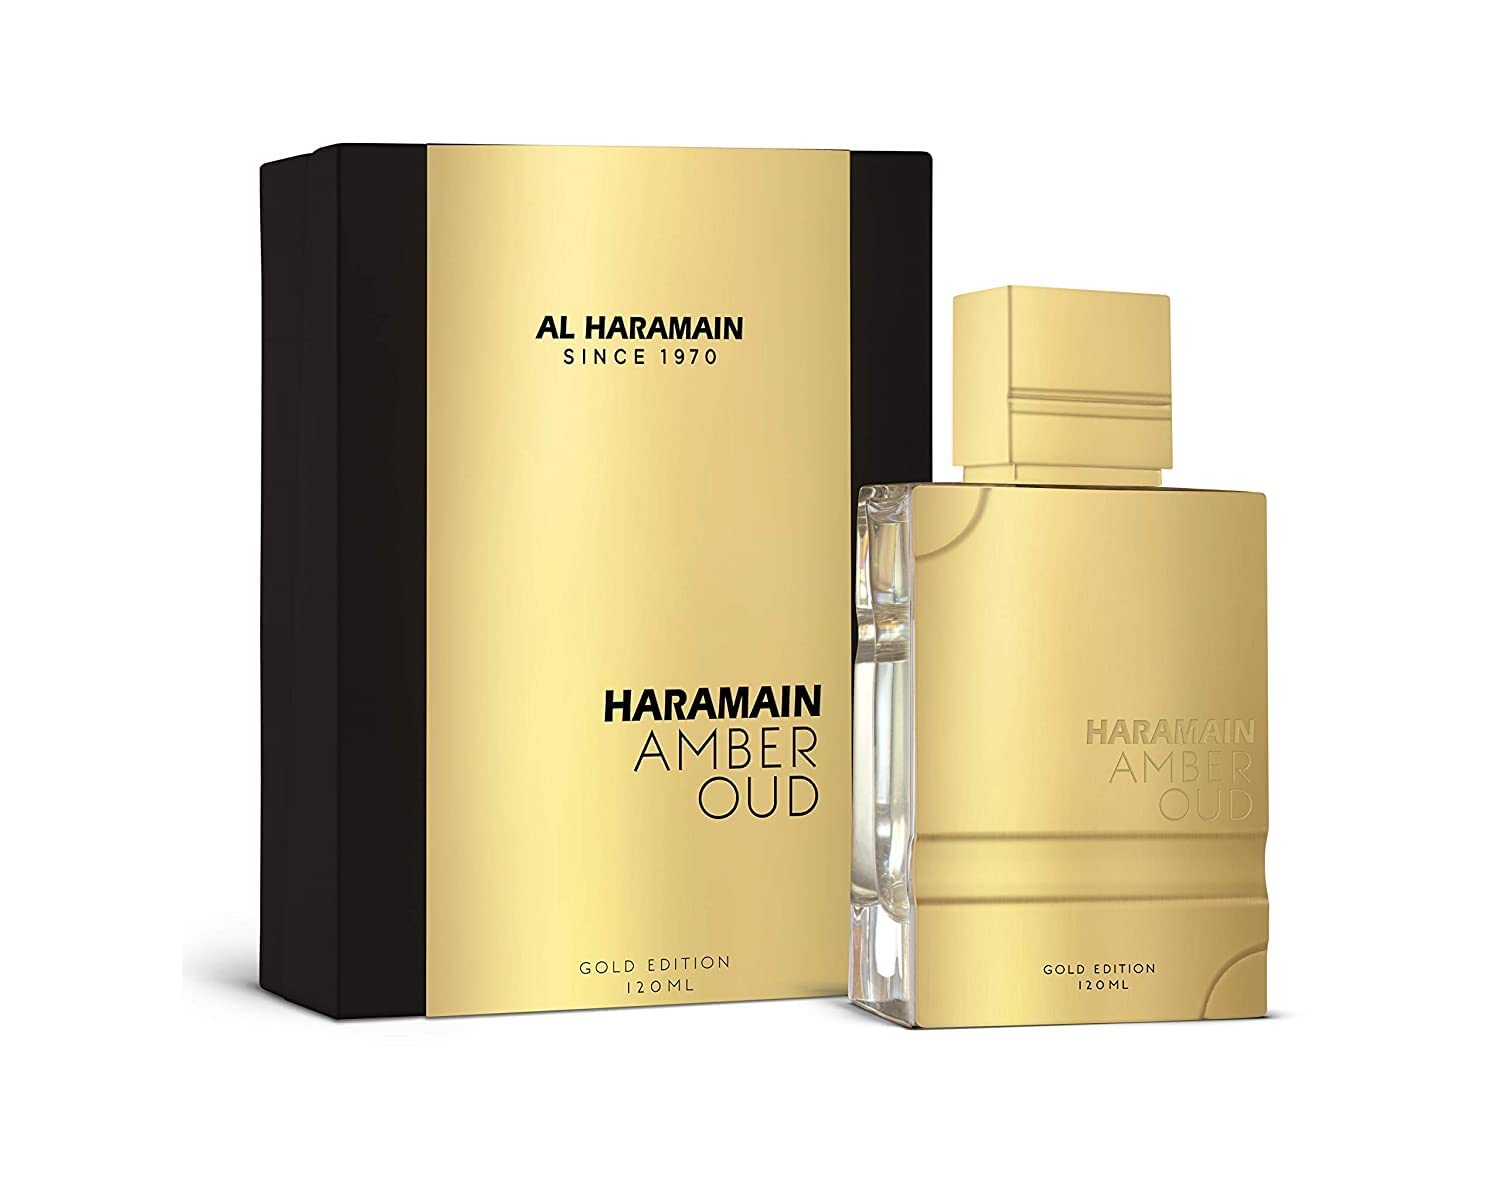 Al Haramain Amber Oud Gold Edition Eau de Parfum Spray